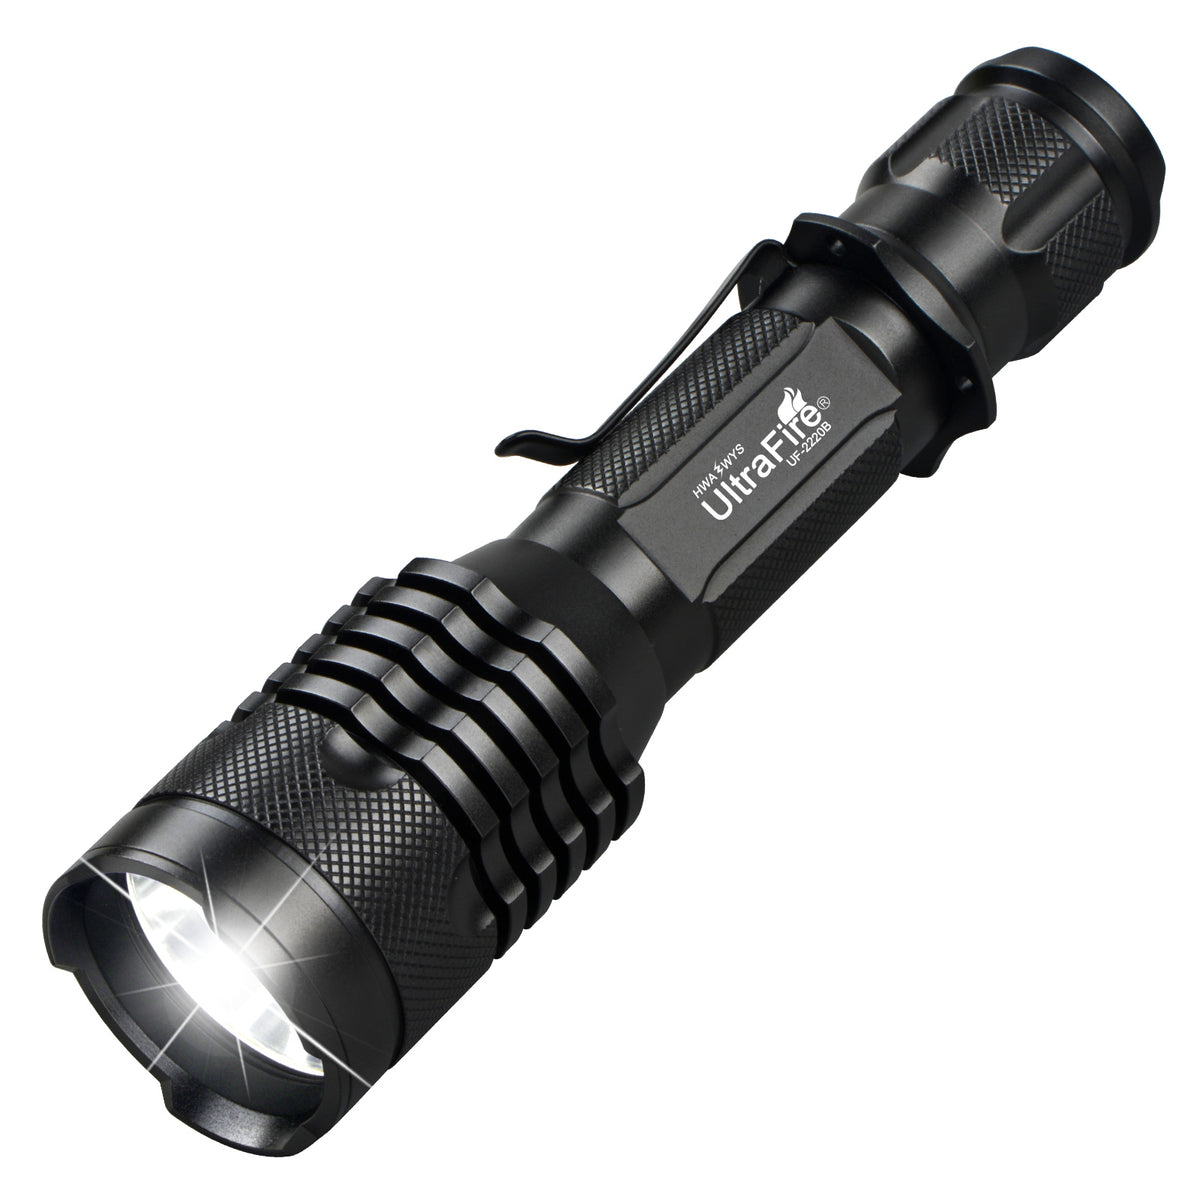 UltraFire UF-2220B High Power LED Strong Light flashlight